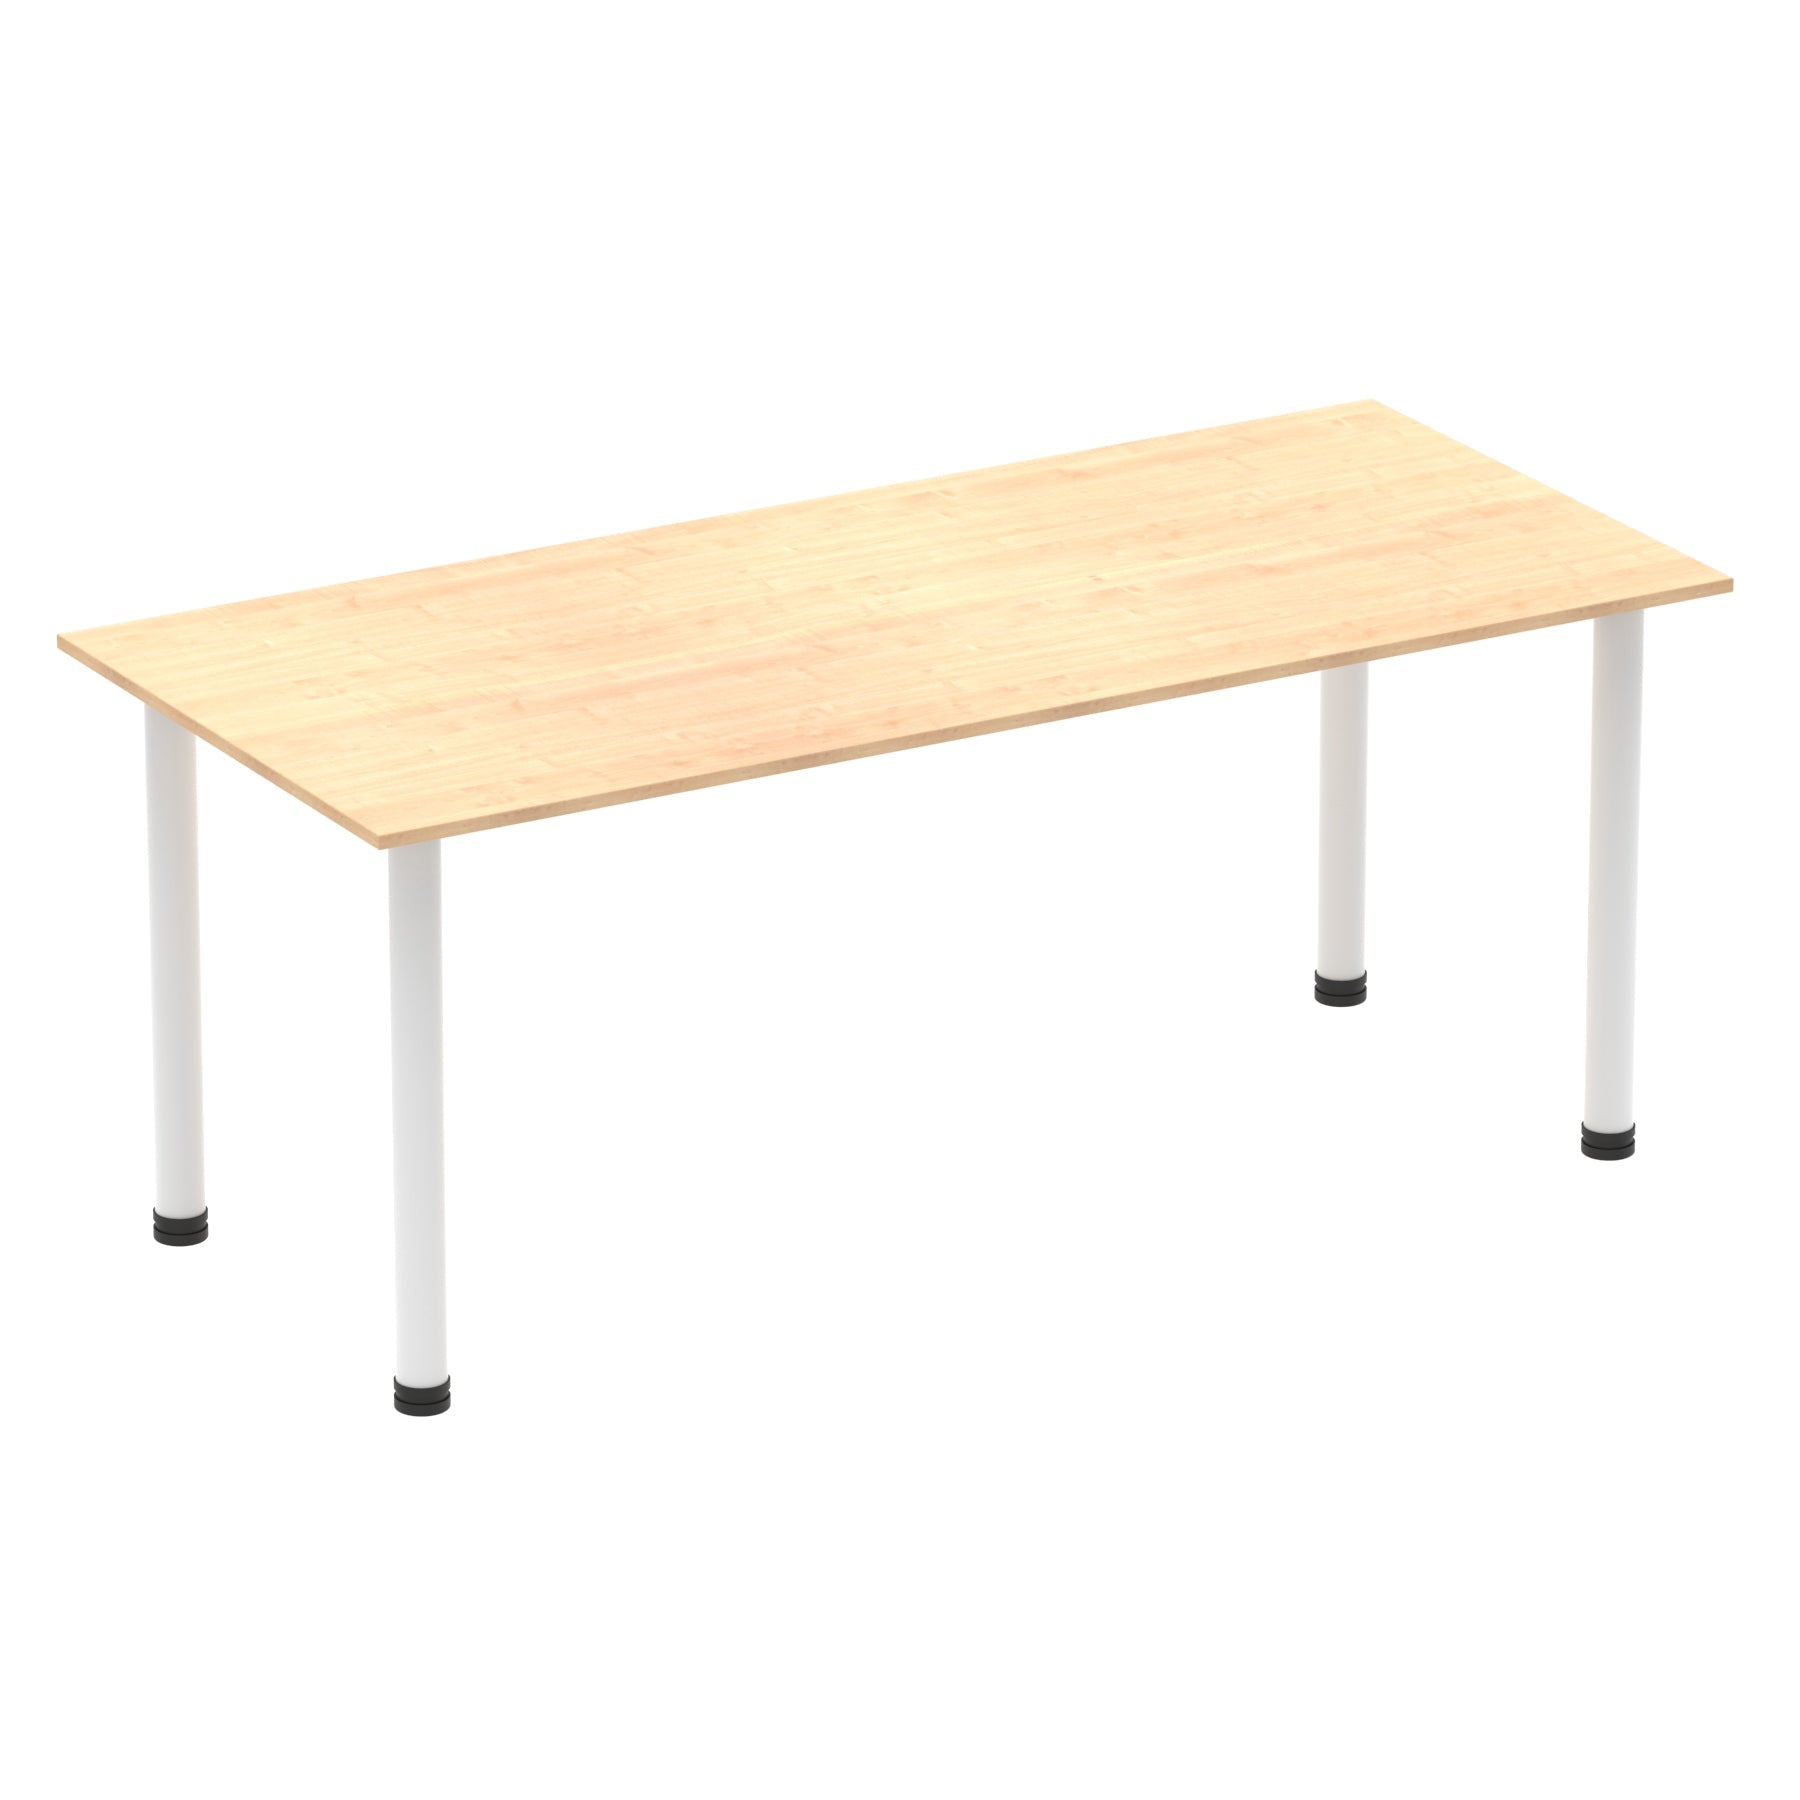 Impulse 1800mm Straight Table With Post Leg